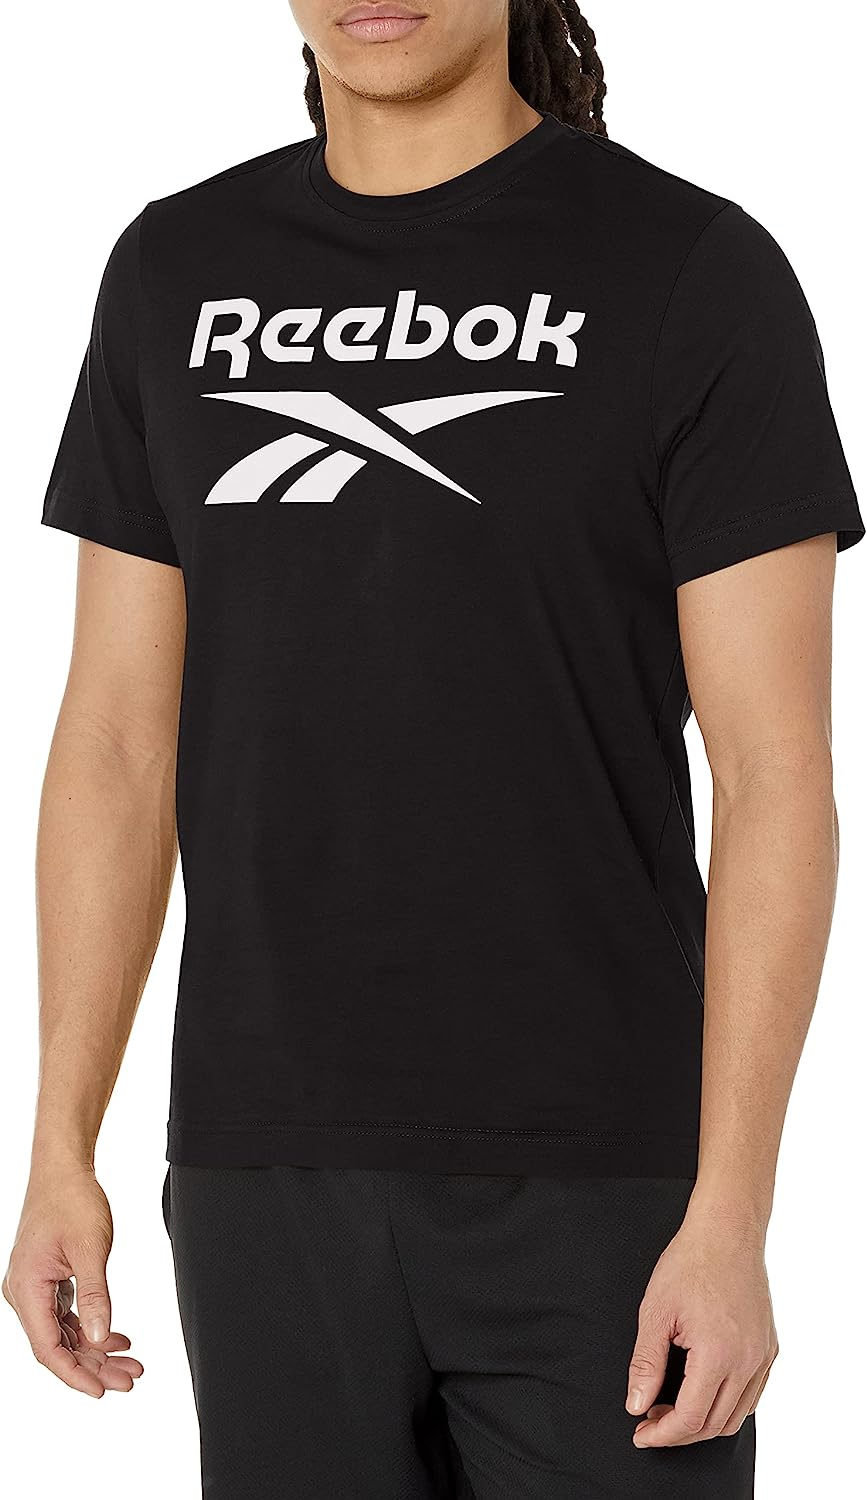 Reebok Men's Big Logo Tee (Black) $8 + Free Shipping w/ Prime or on $35 $7.99